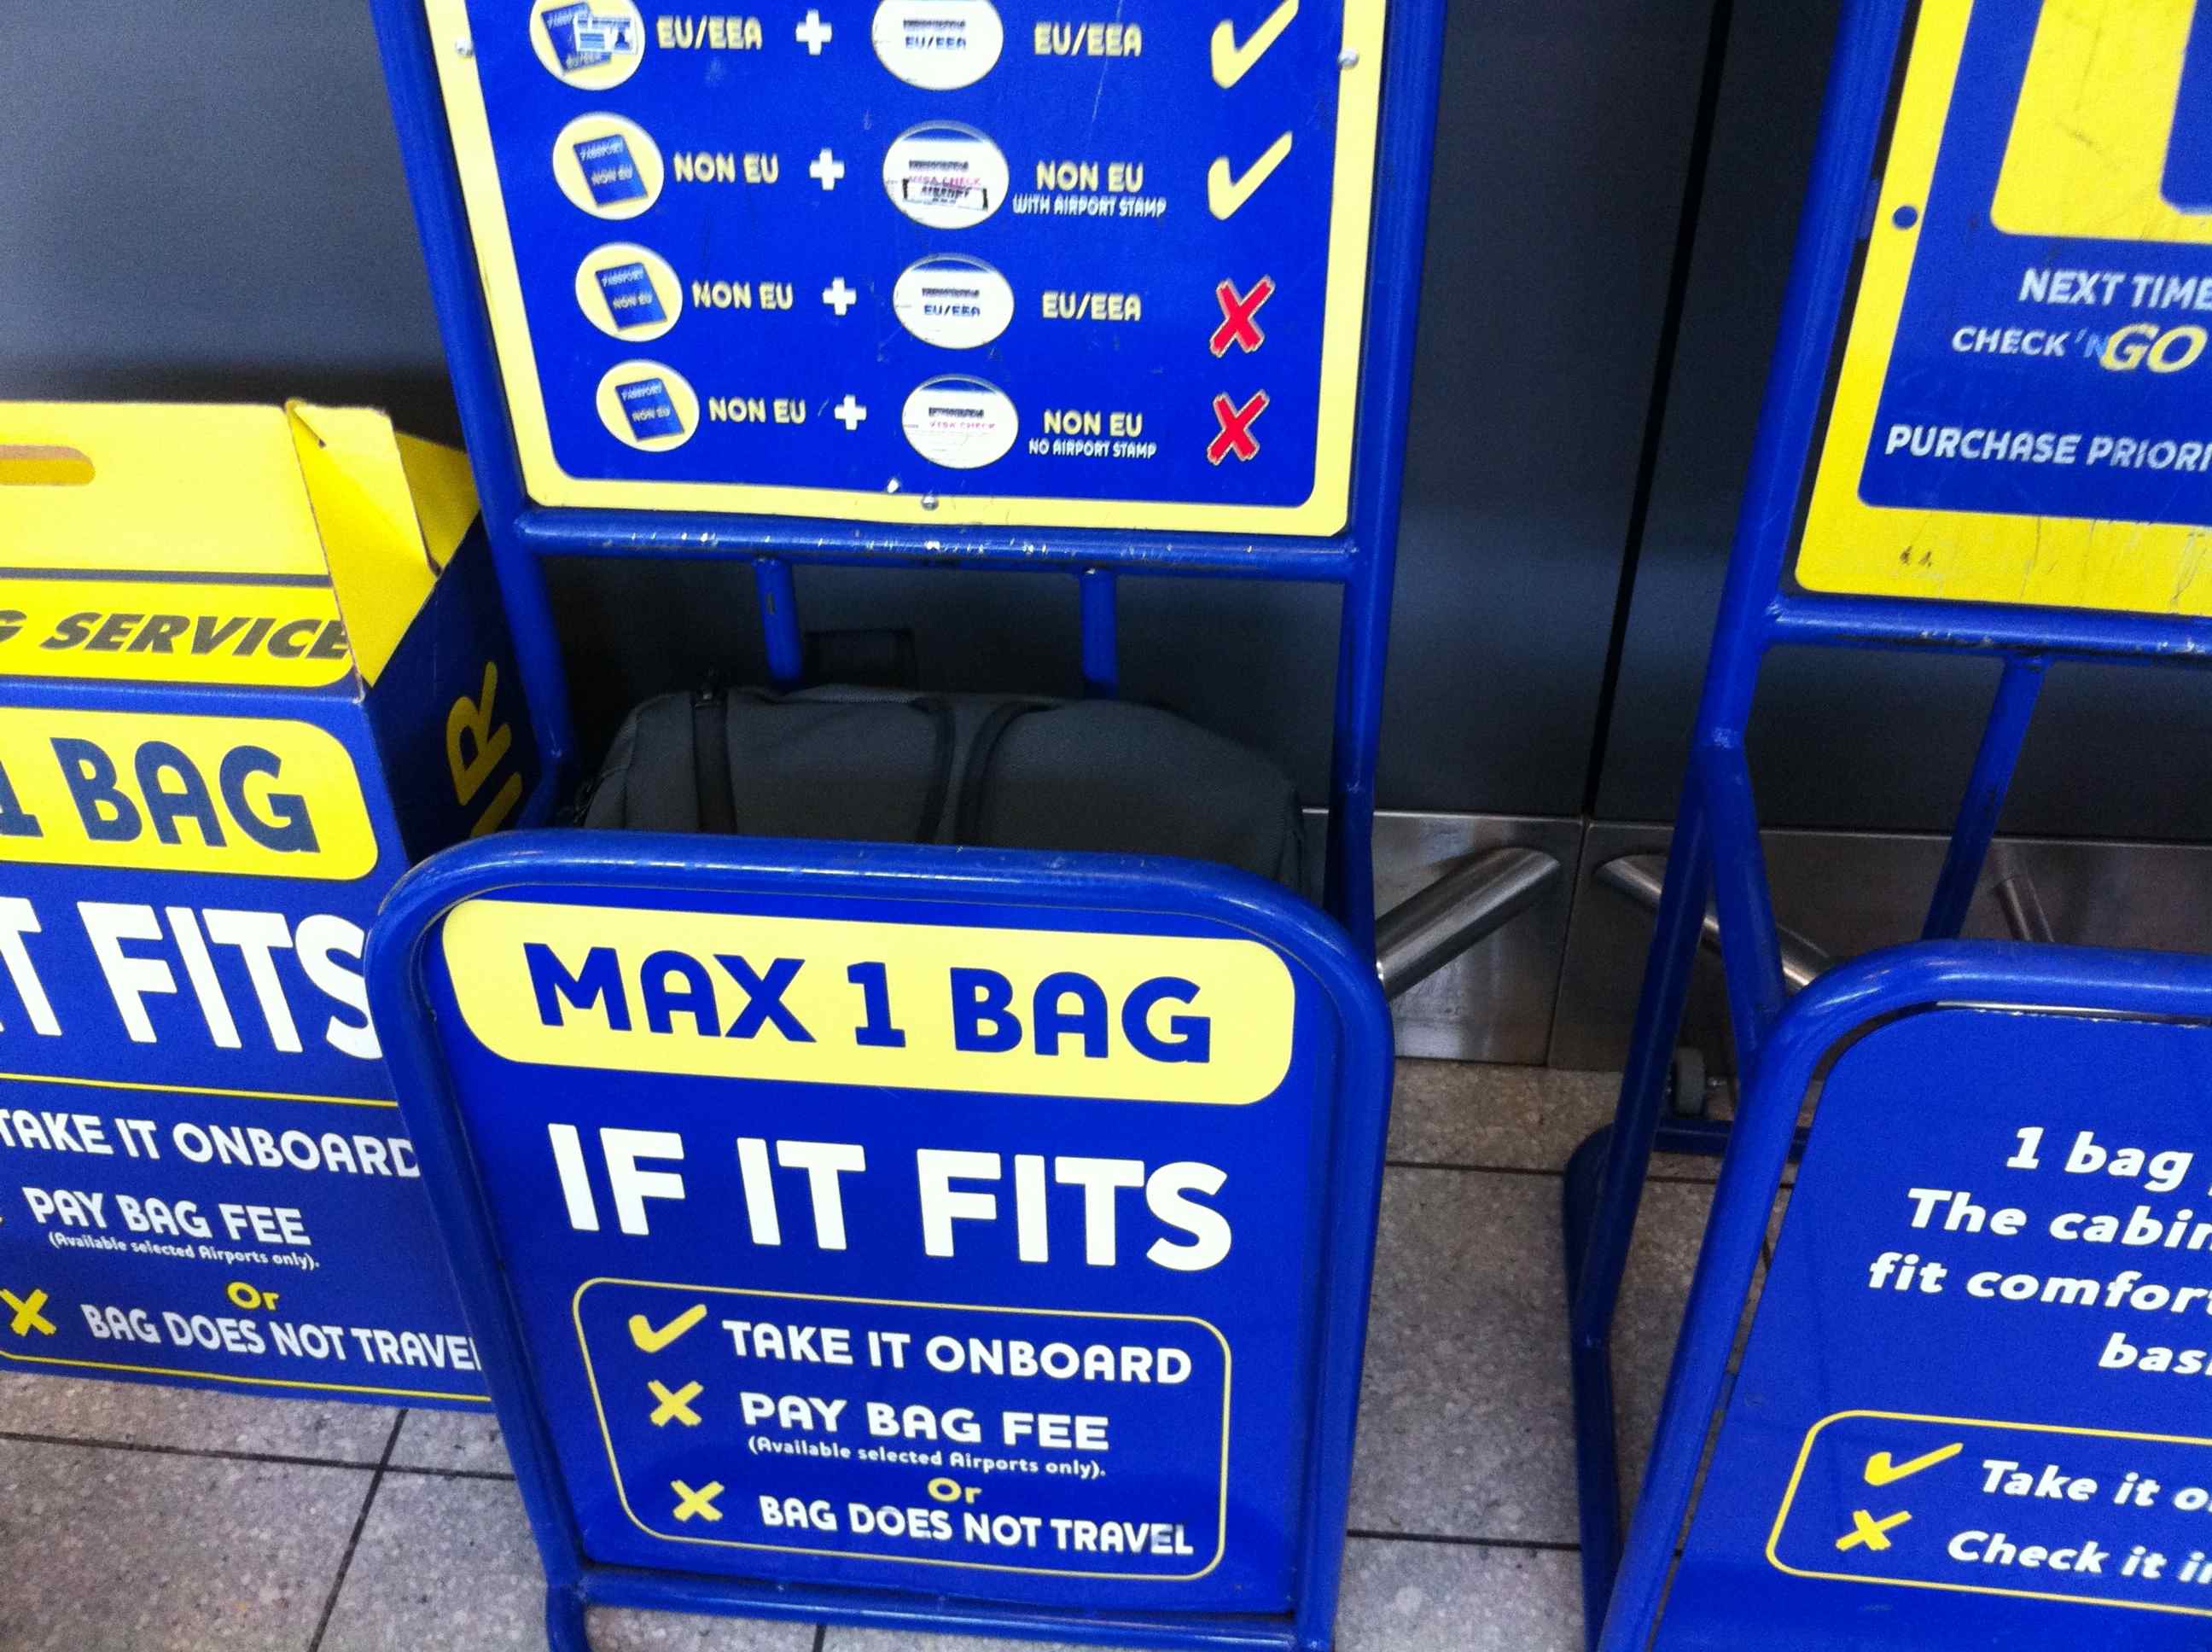 Ryanair baggage size